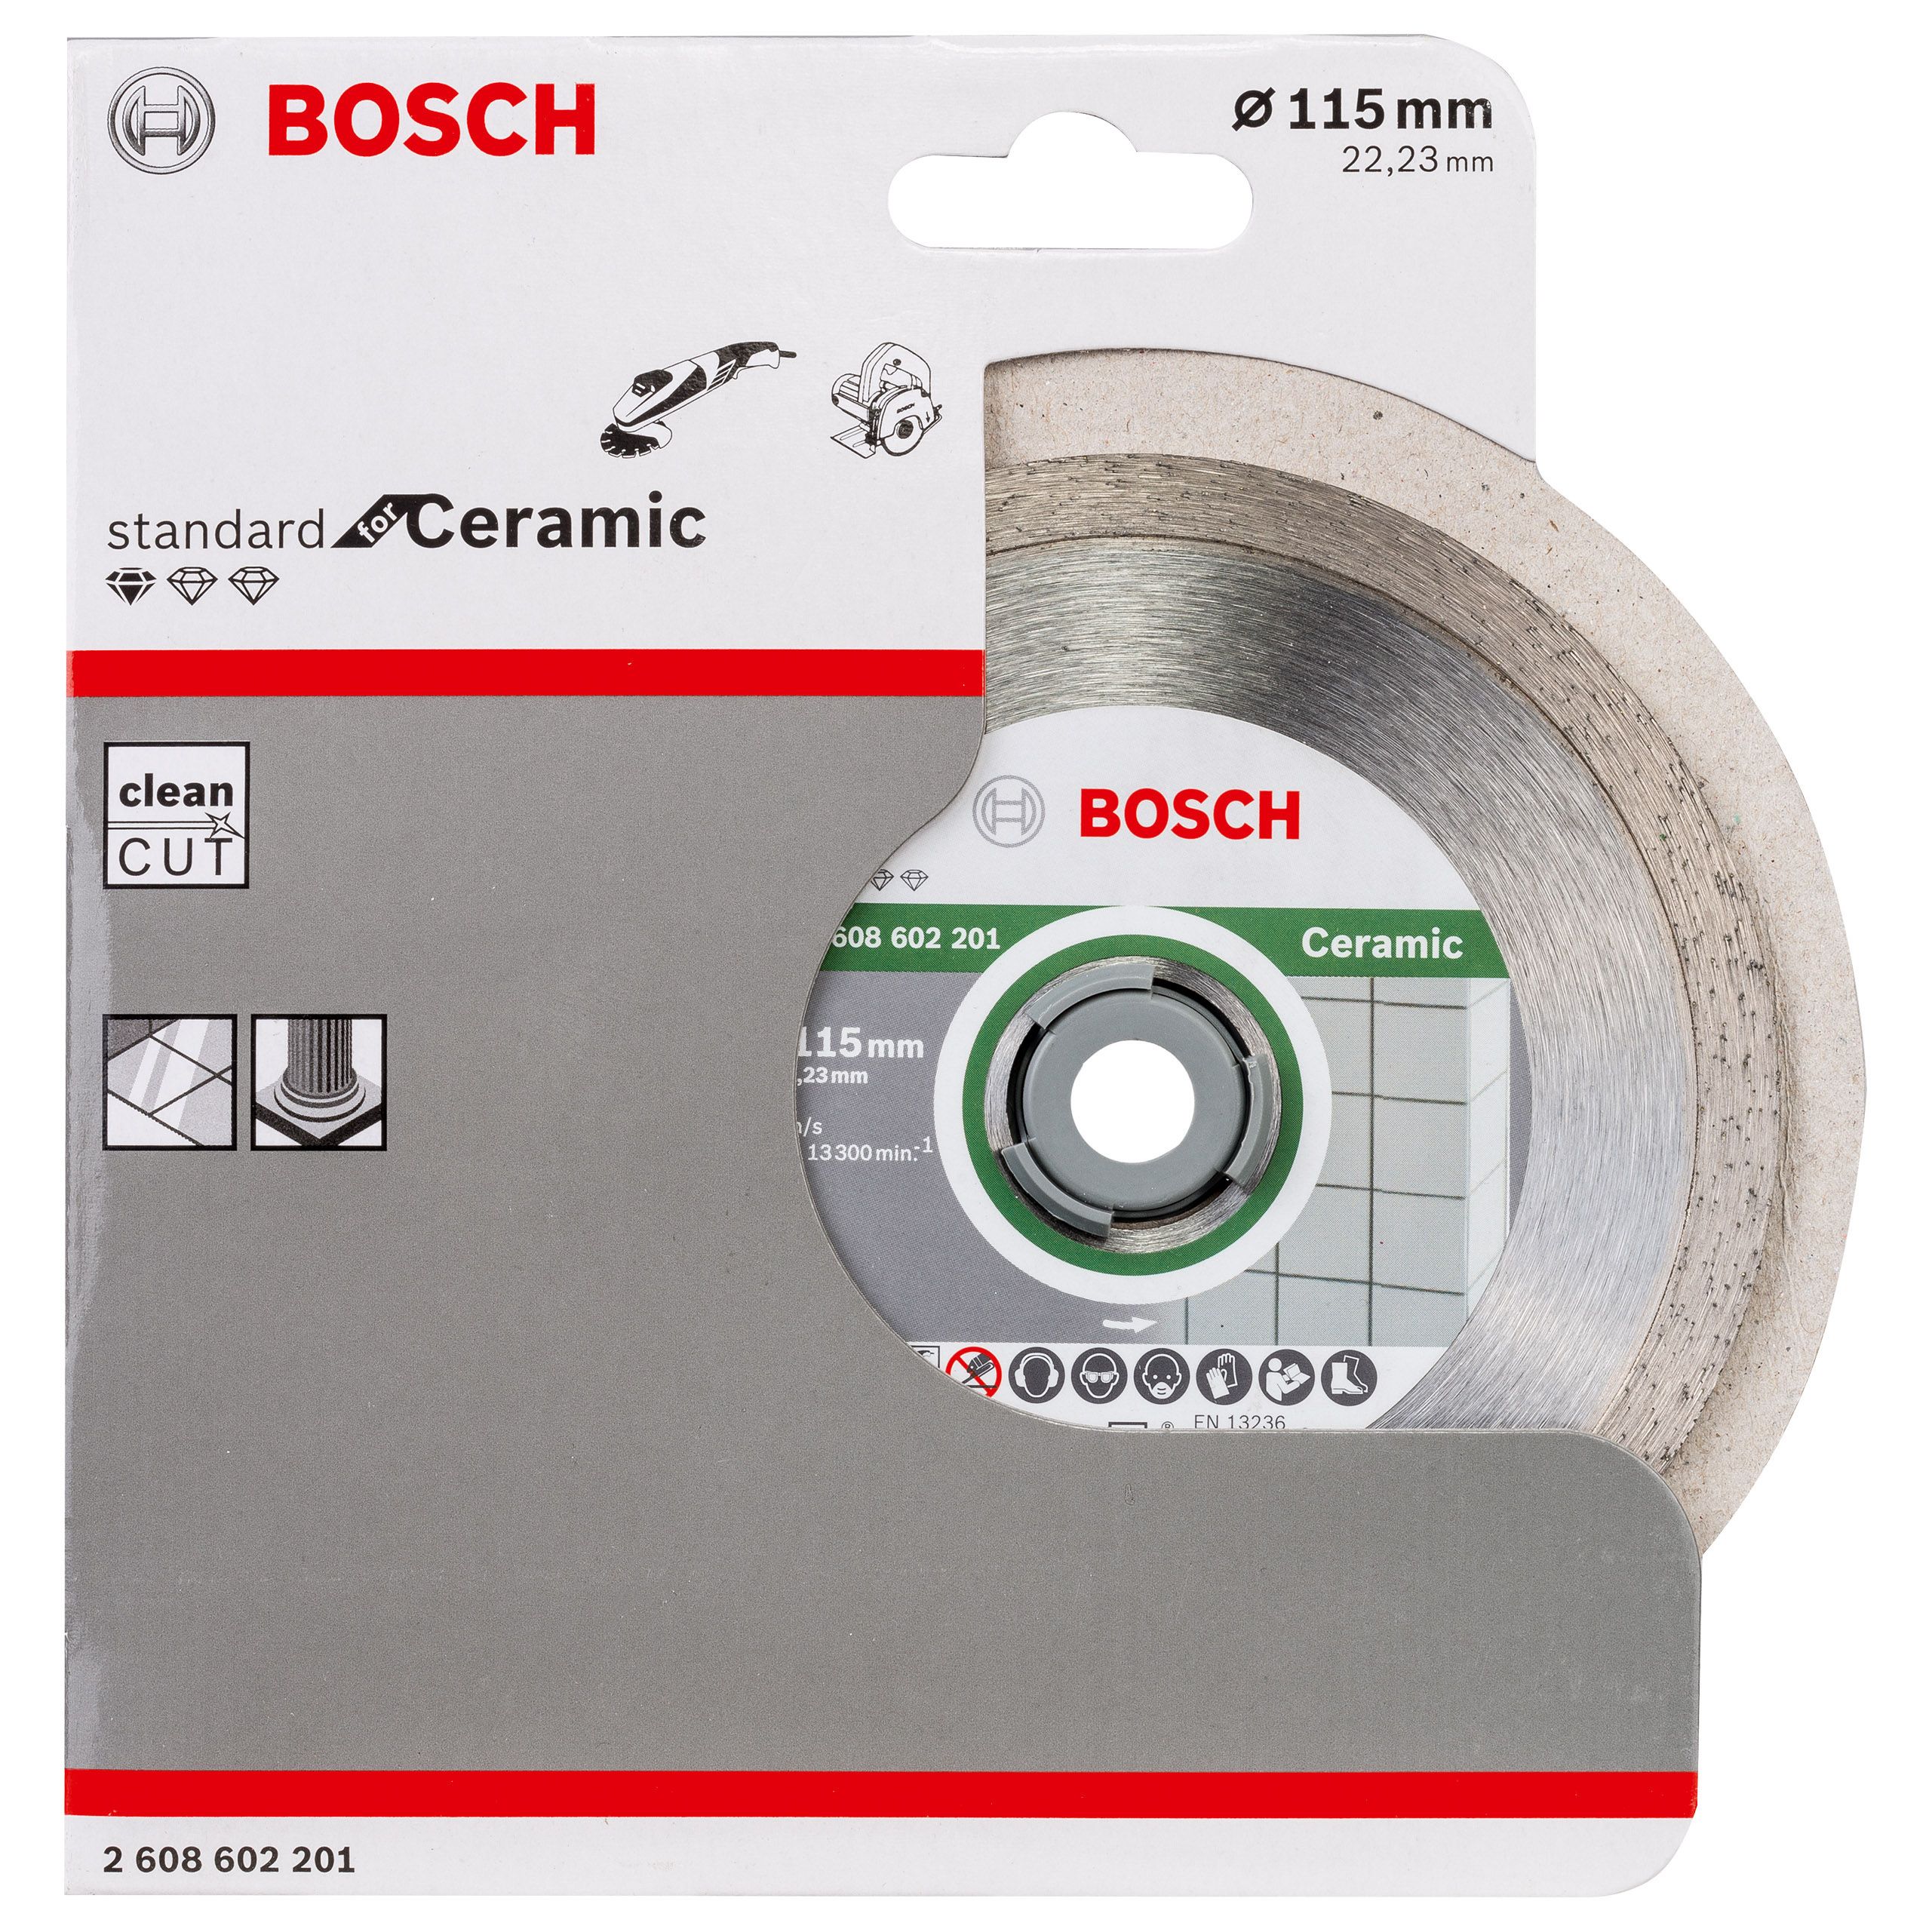 Bosch 115mm x 22.23mm Continuous rim diamond blade